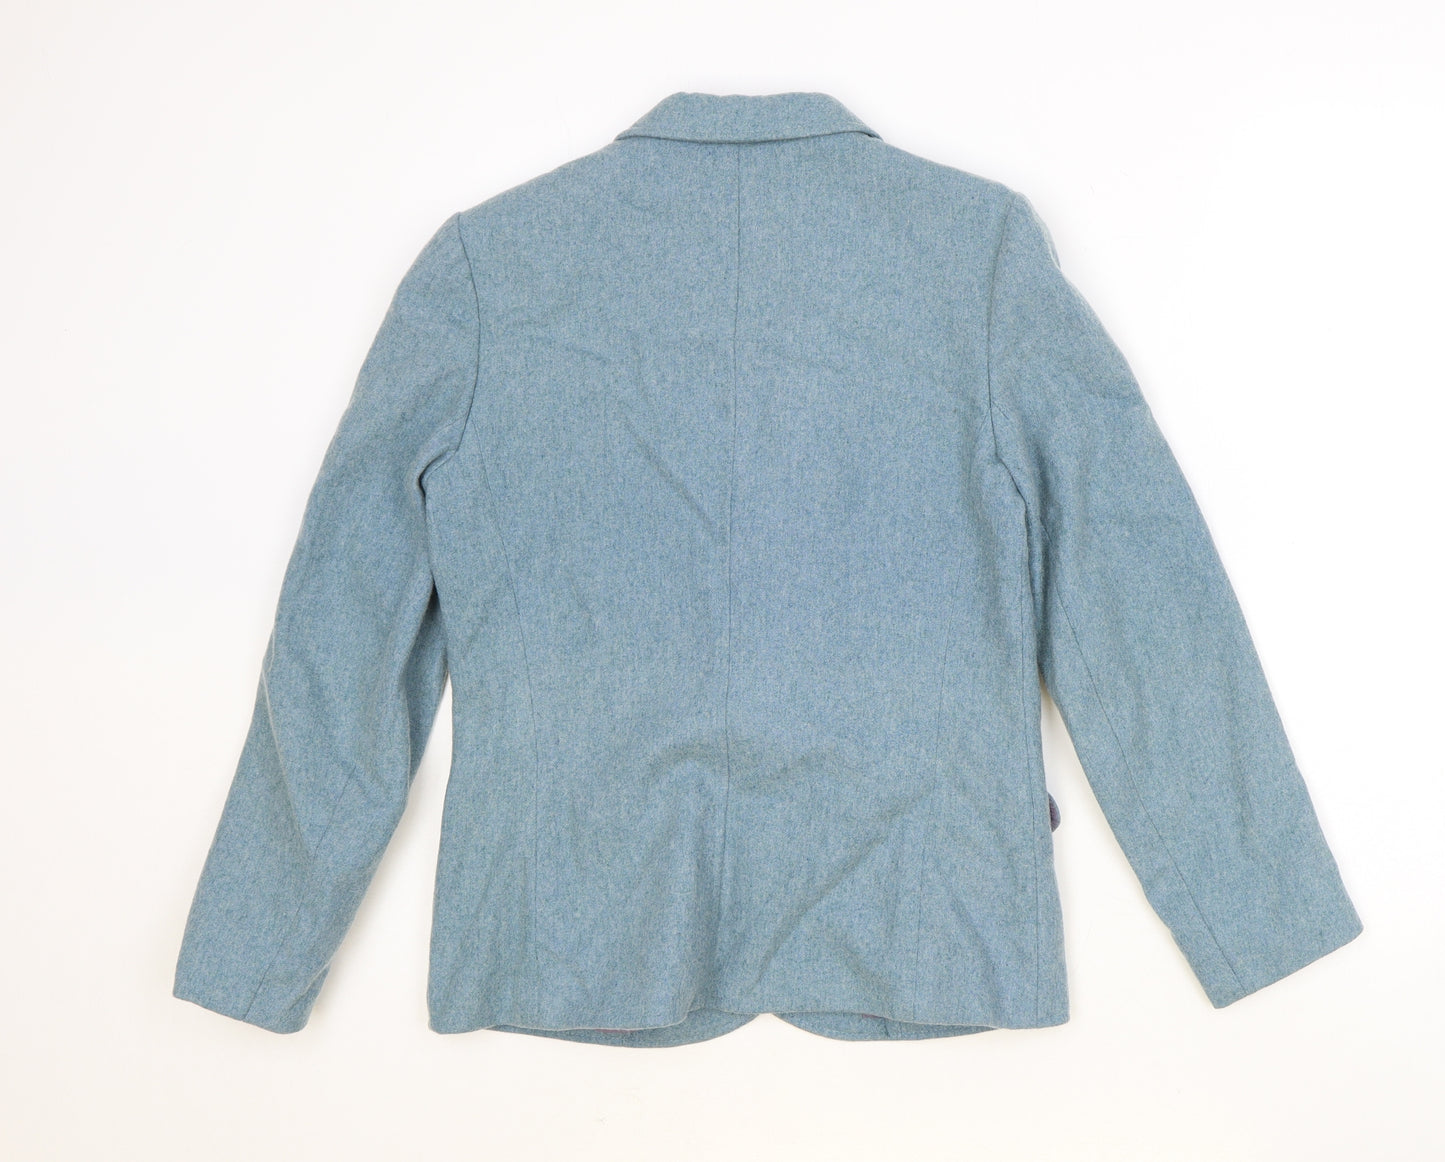 Dito Dito Womens Blue Polyester Jacket Blazer Size 10